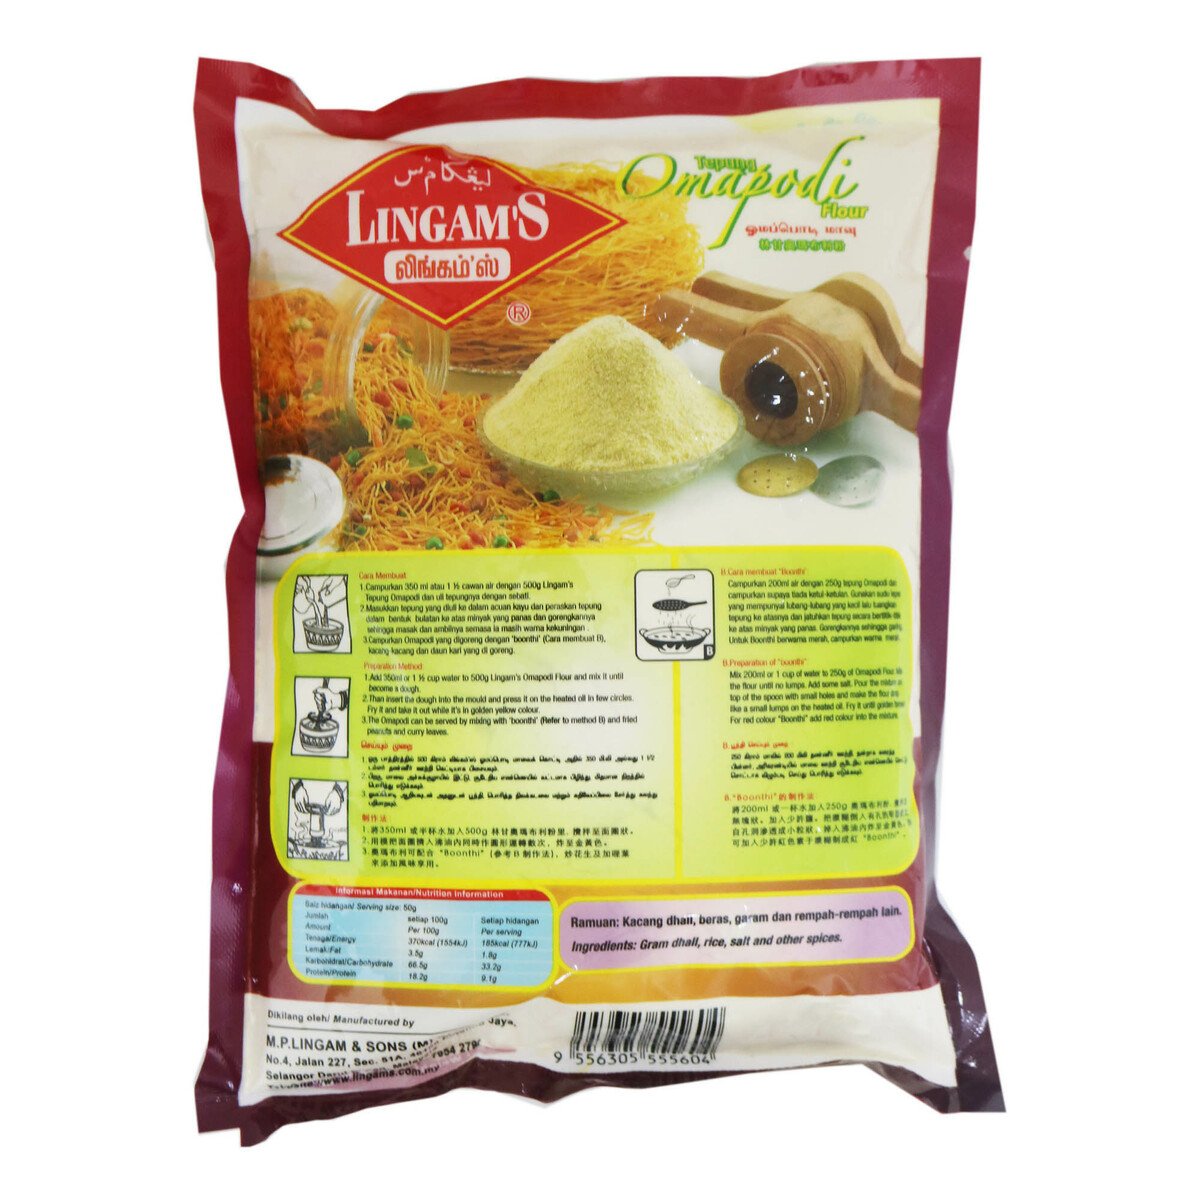 Lingam's Omapodi 500g